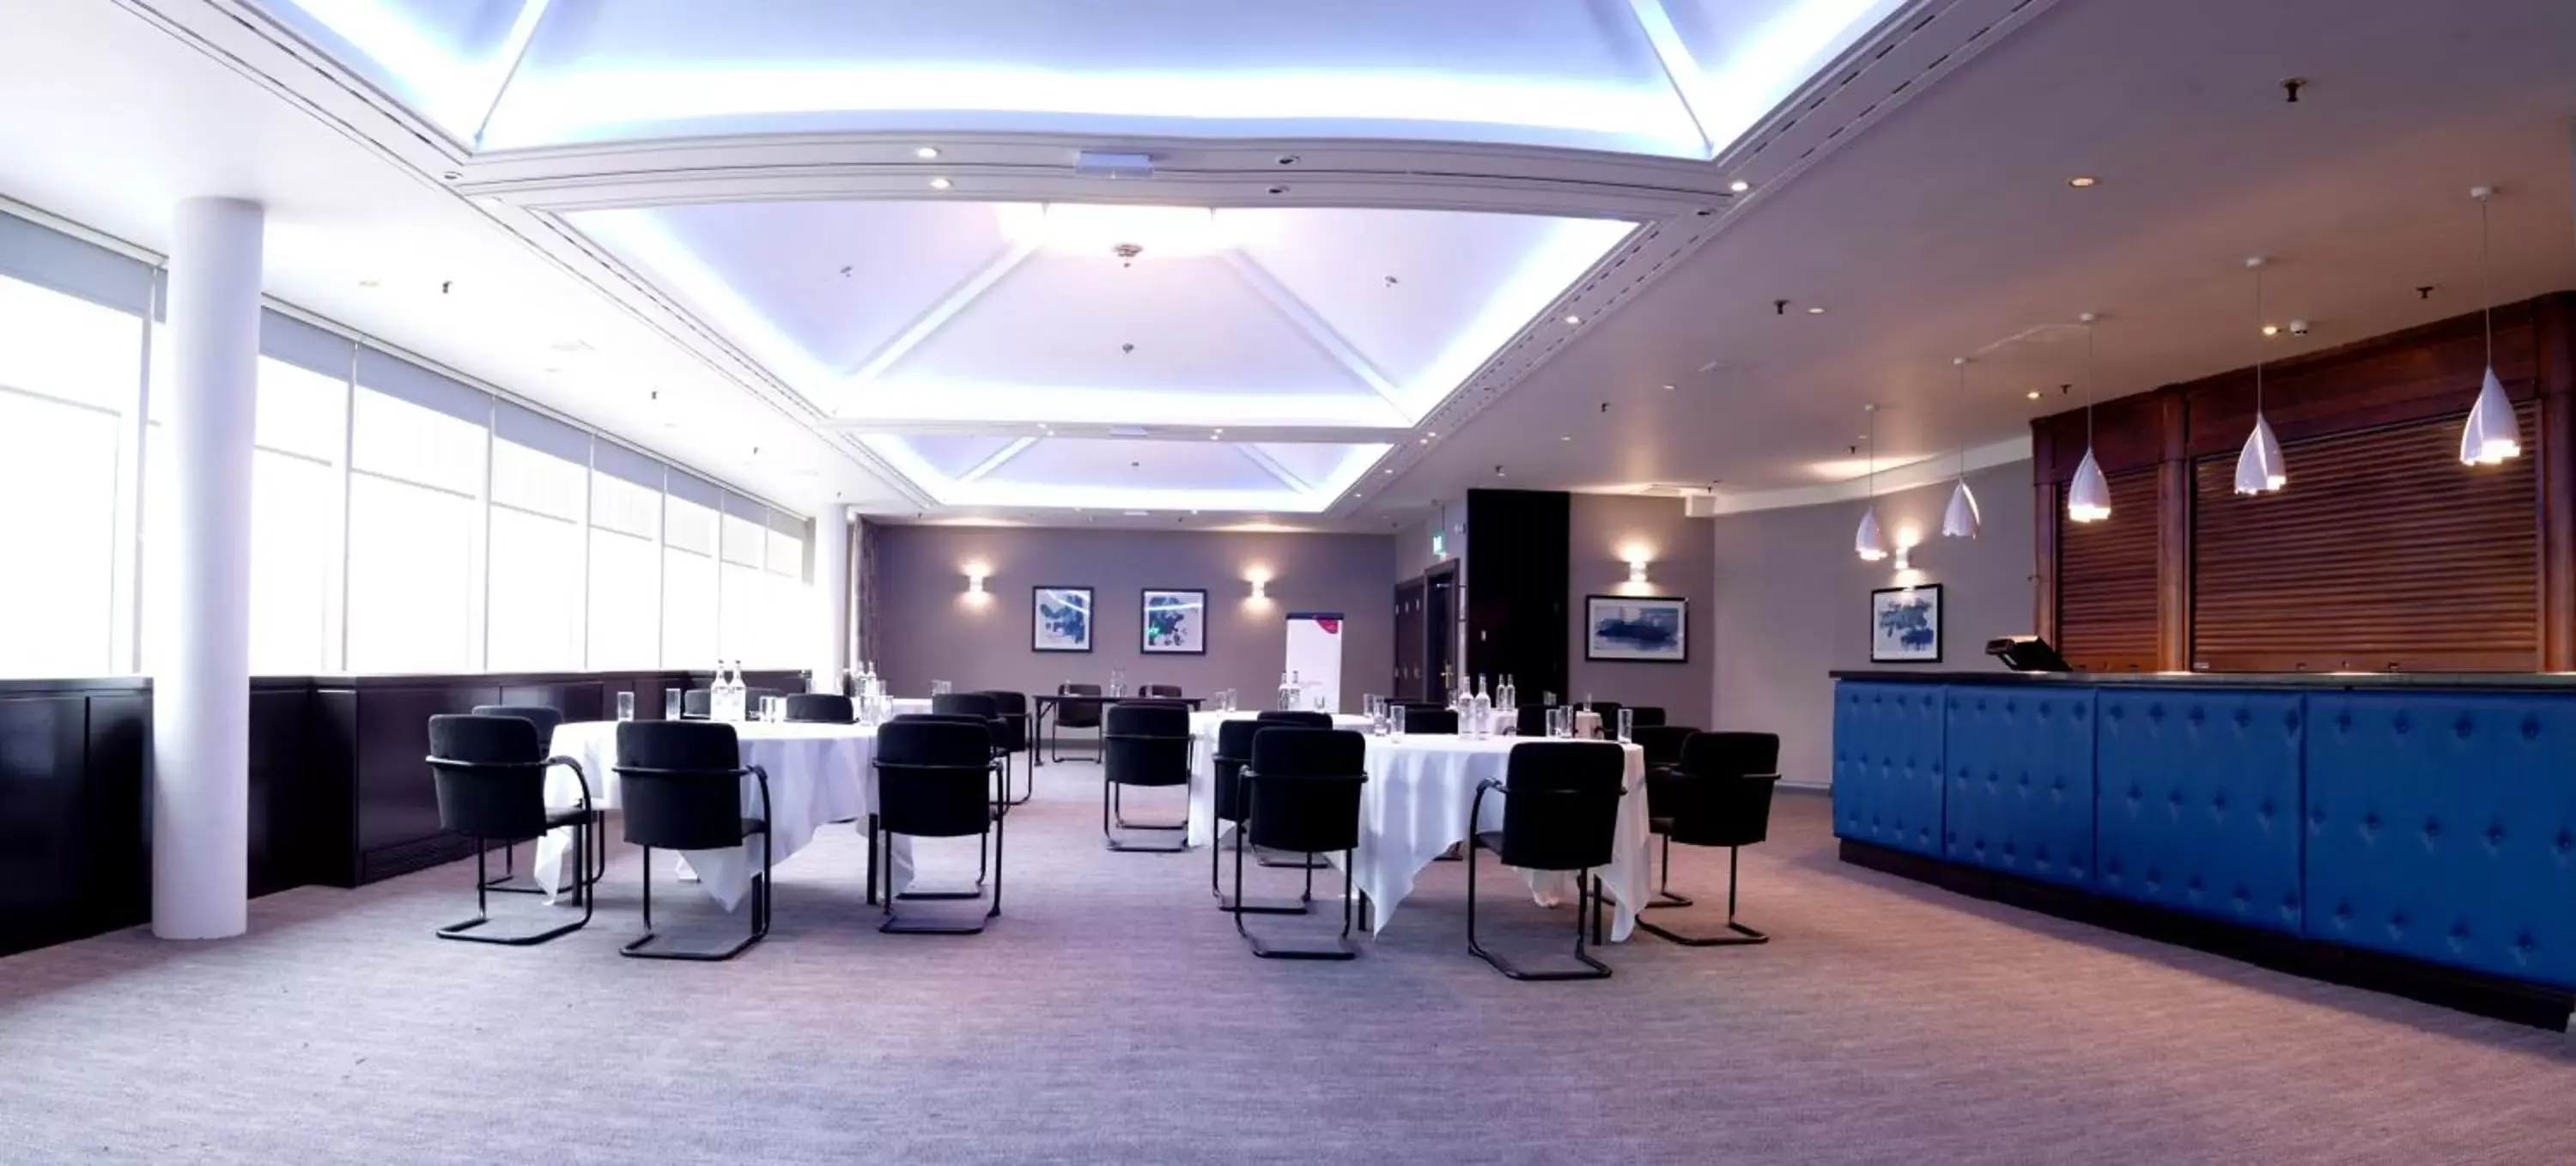 Meeting/conference room in Crowne Plaza Harrogate, an IHG Hotel